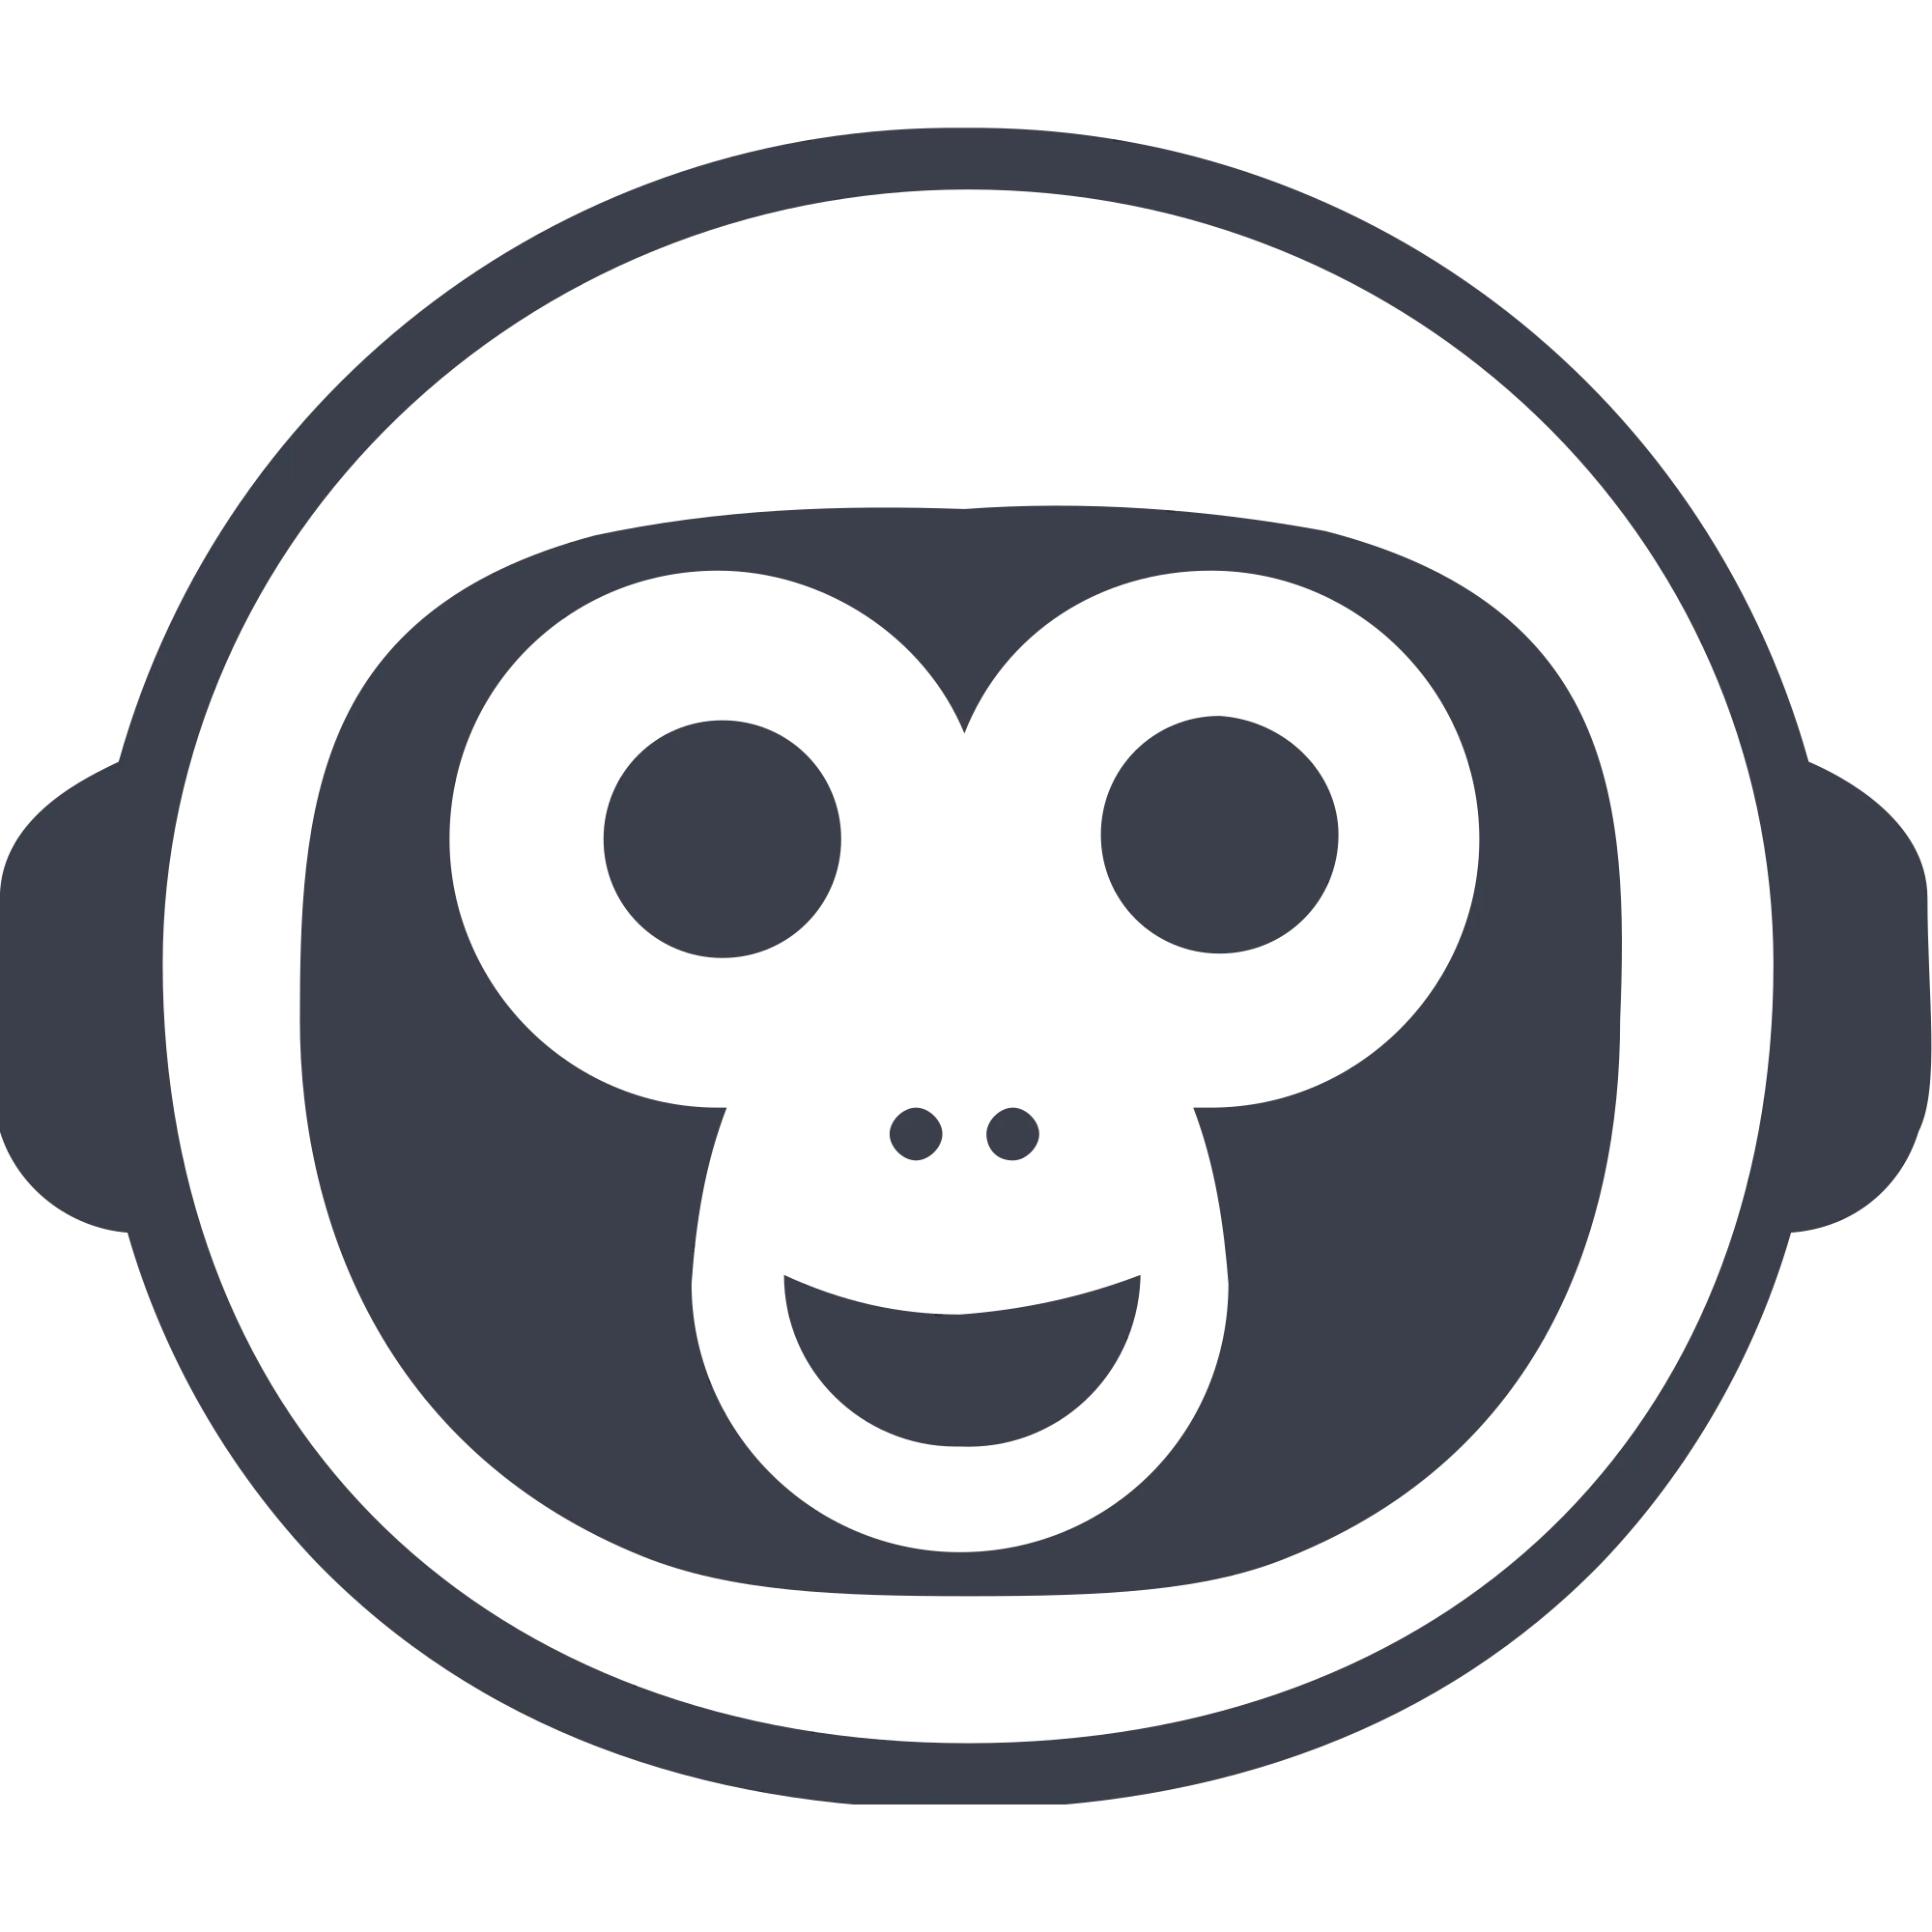 Chimpion logo in png format